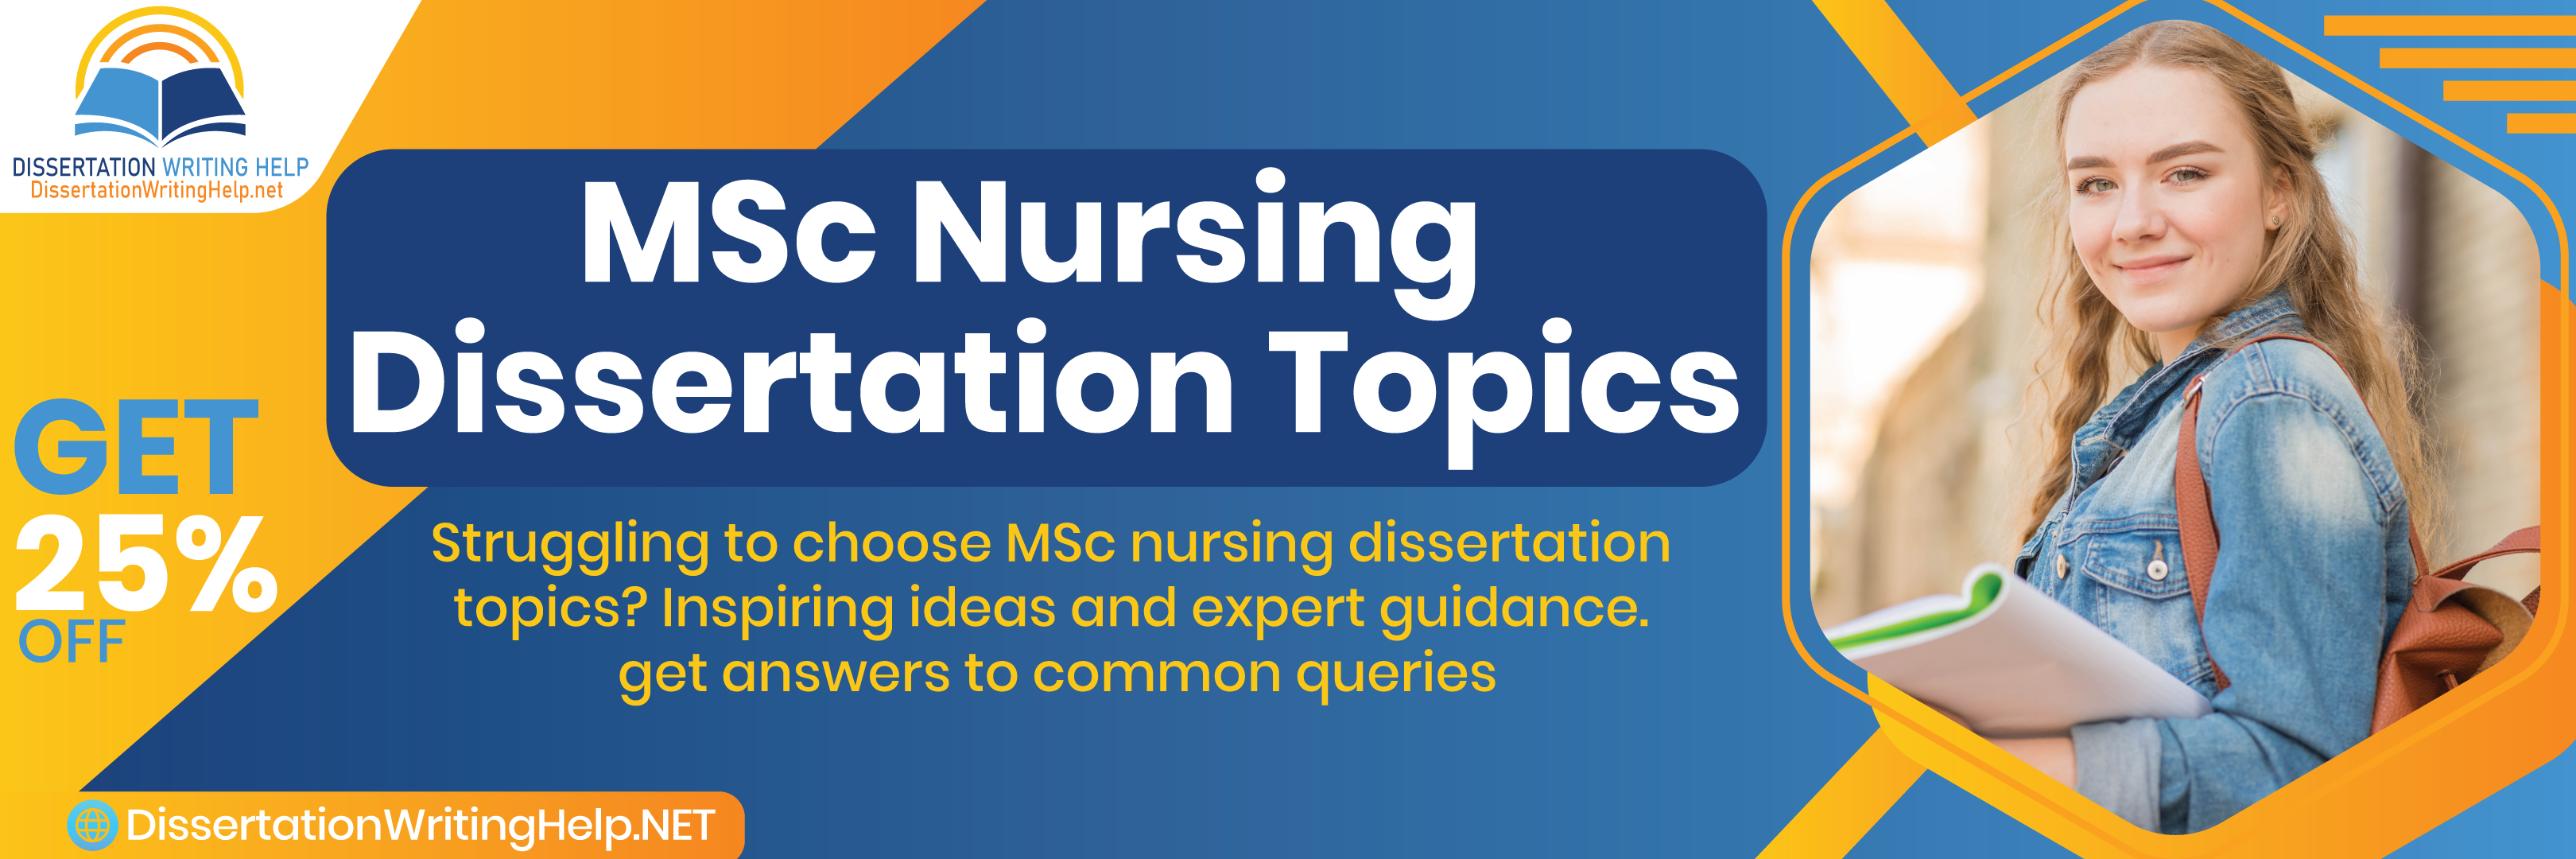 msc-nursing-dissertation-topics